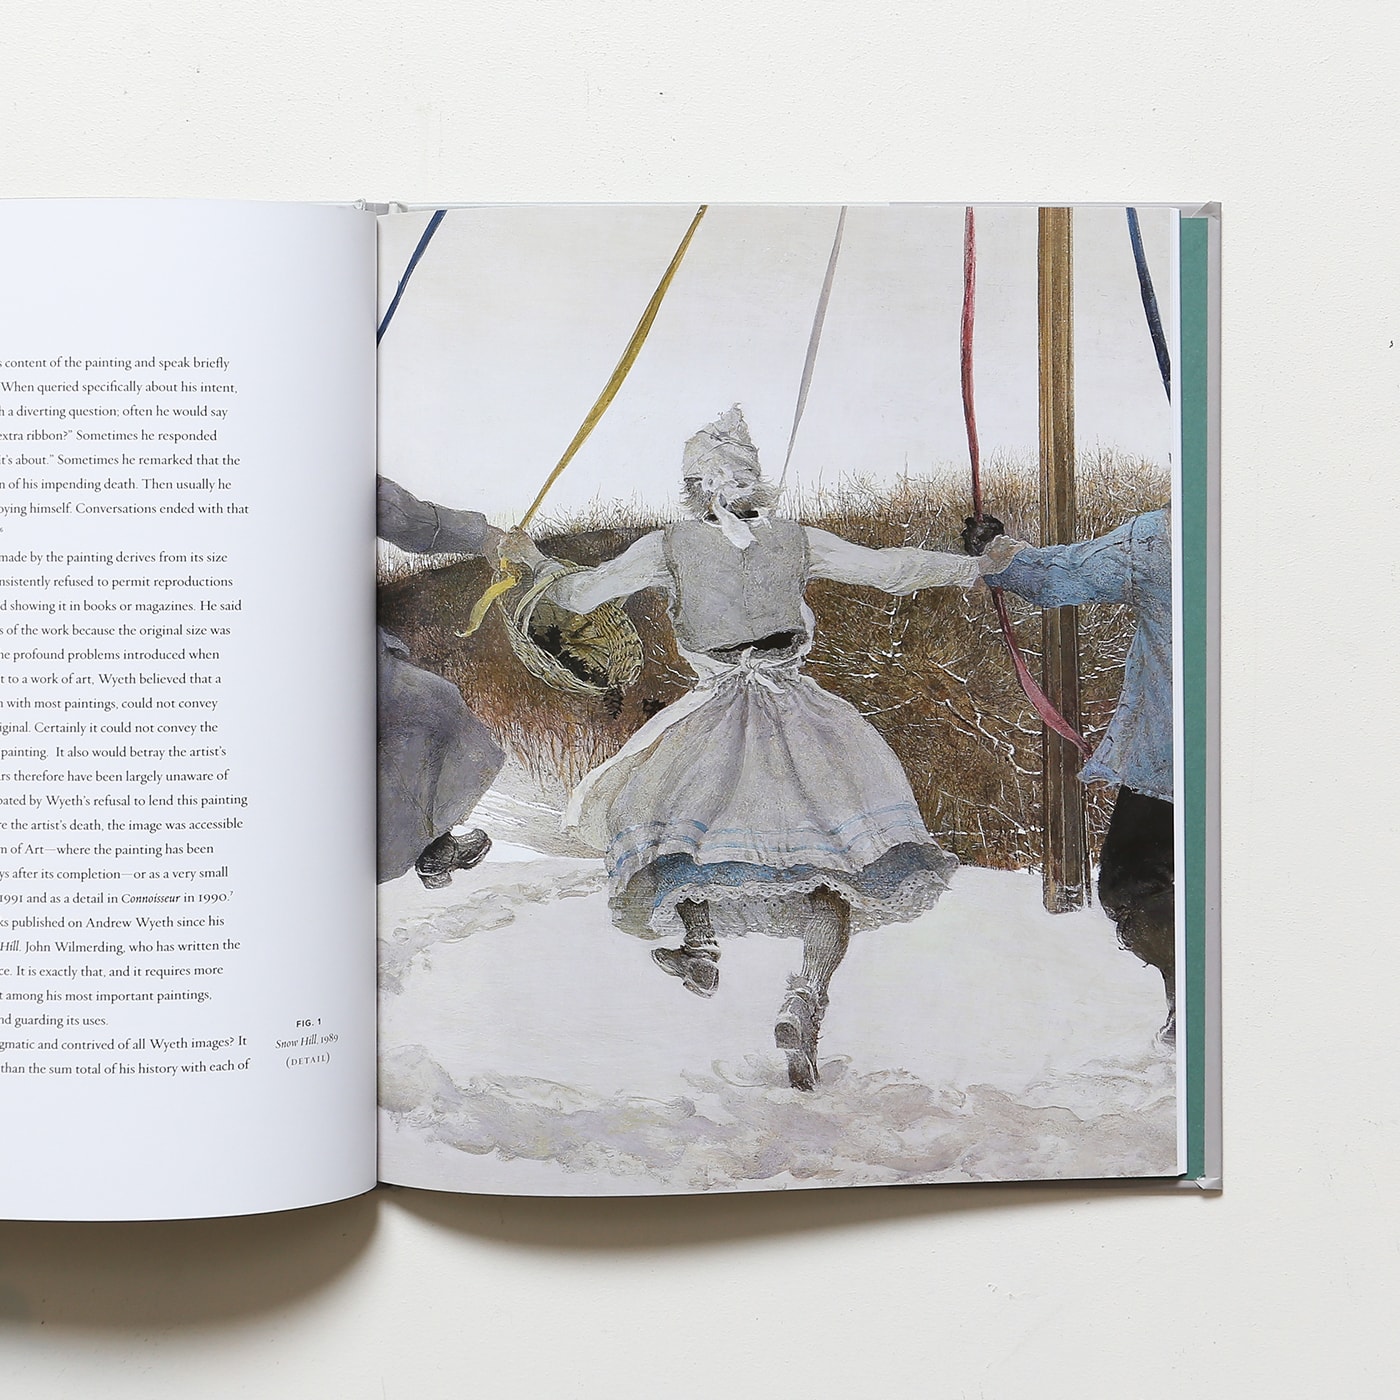 Andrew Wyeth: Snow Hill